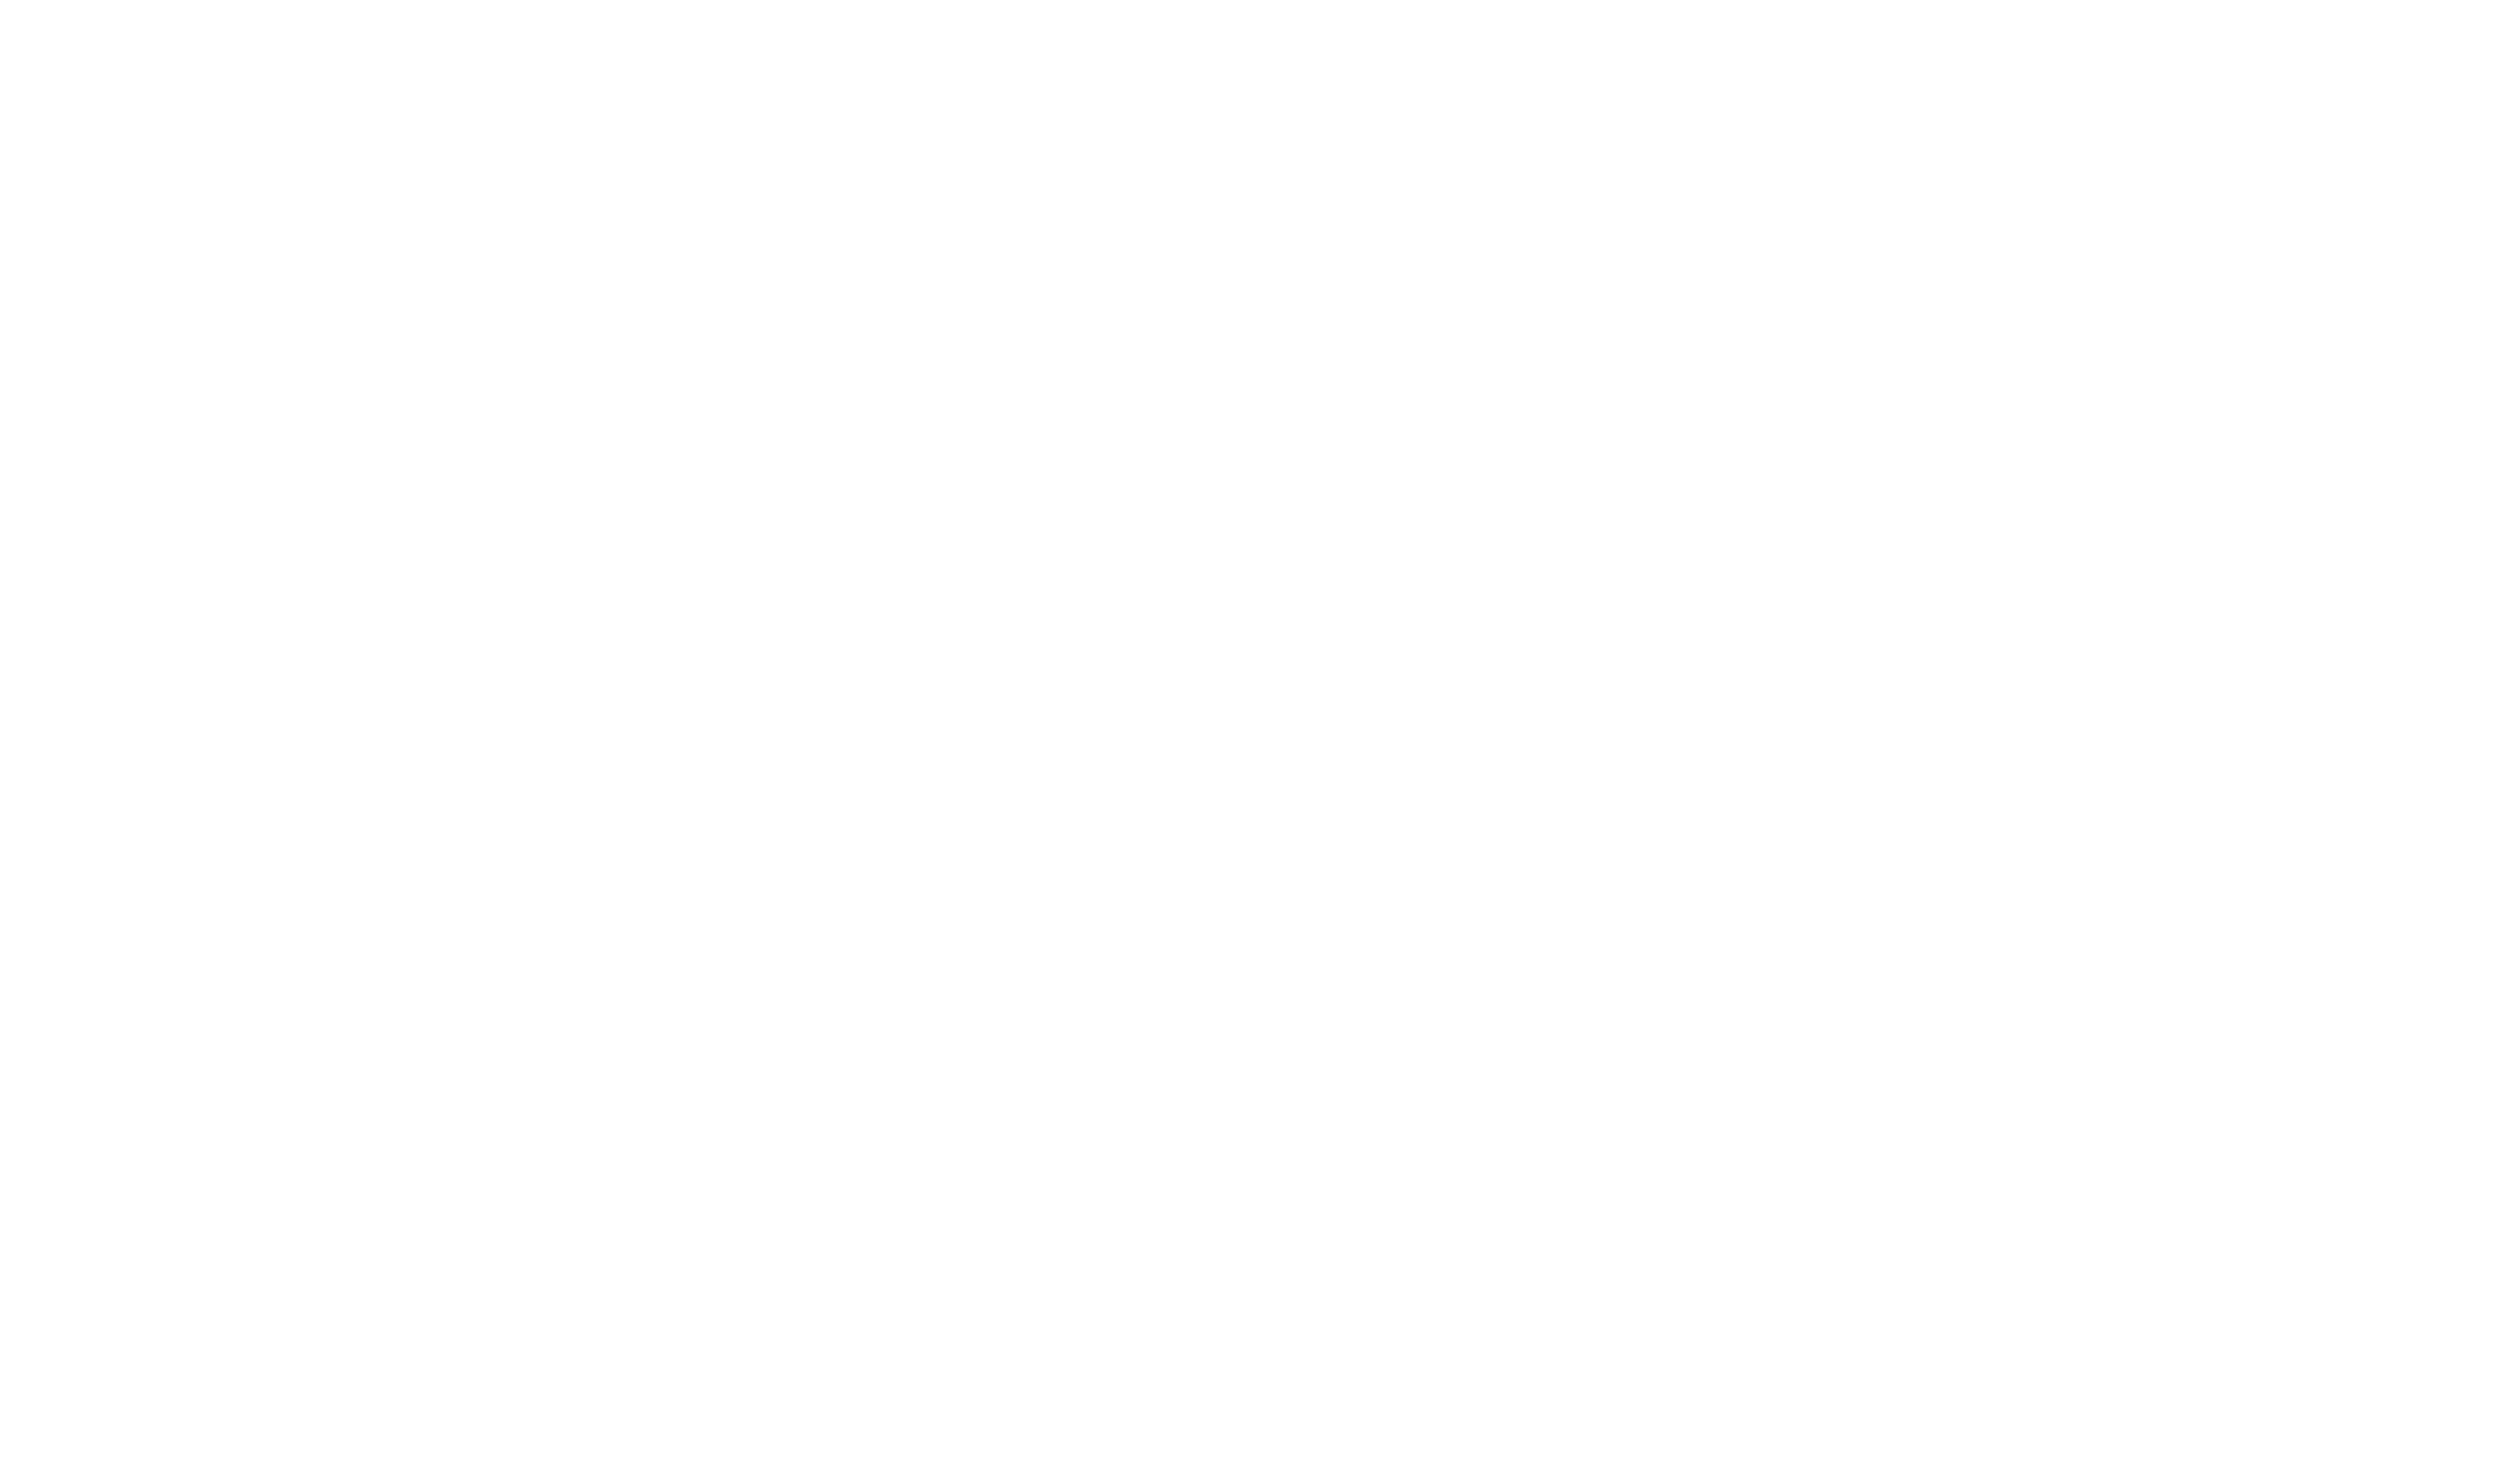 CEEC CoE